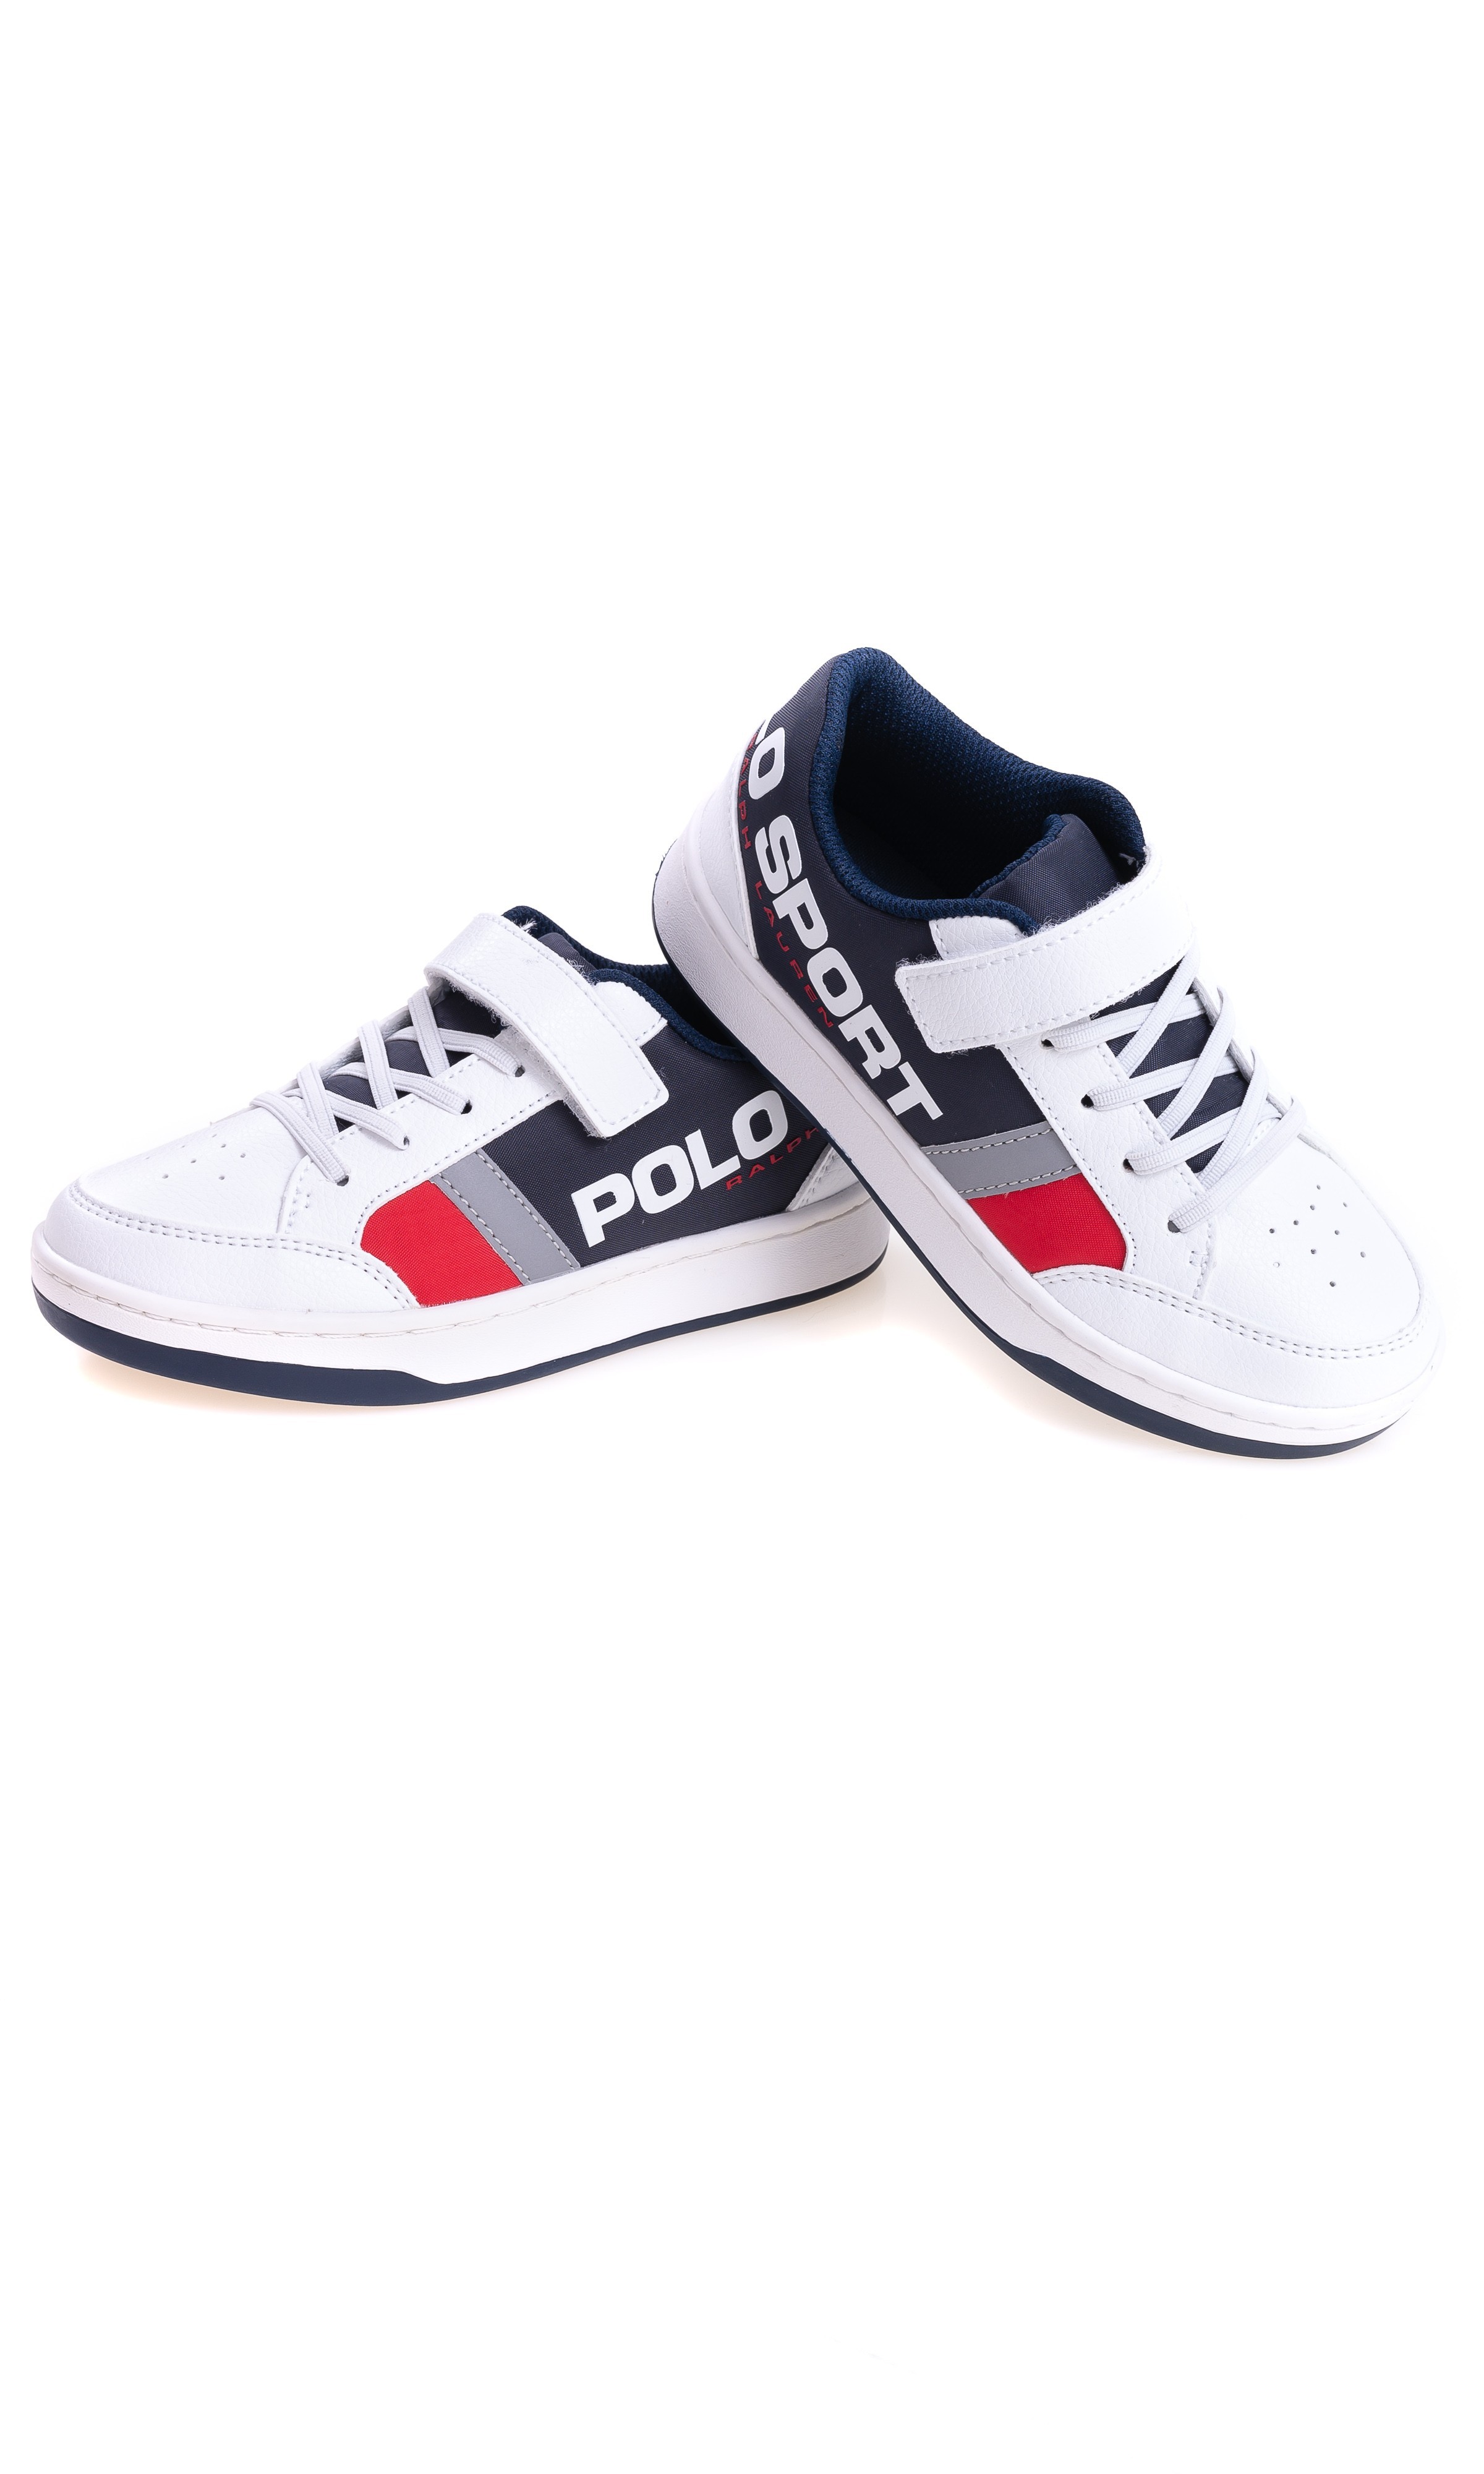 polo shoes sport